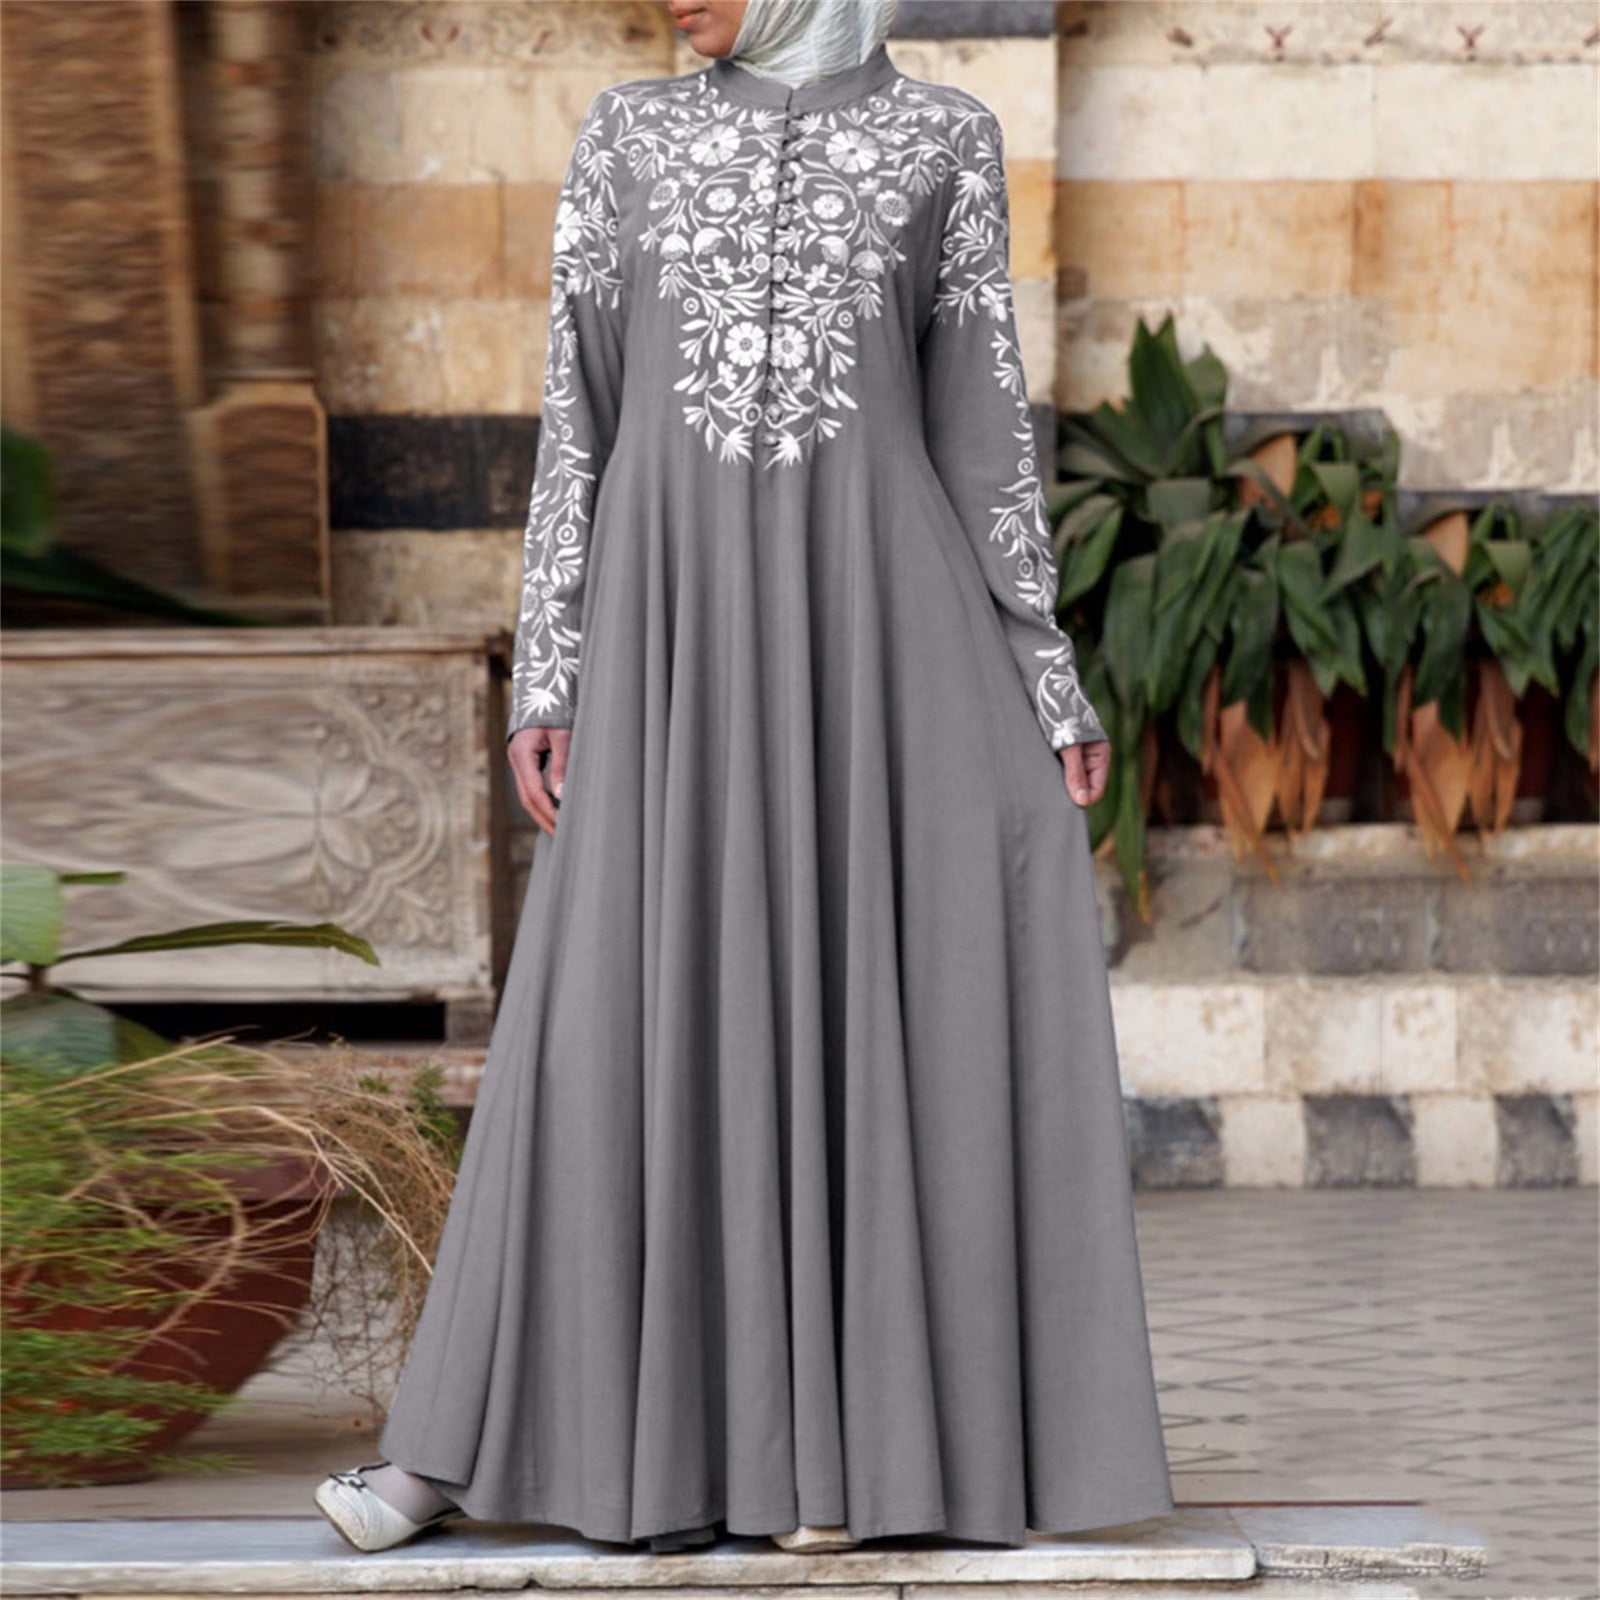 Women Ethnic Embroidery Abaya Muslim Long Maxi Dress Kaftan Loose Robe Gown Arab